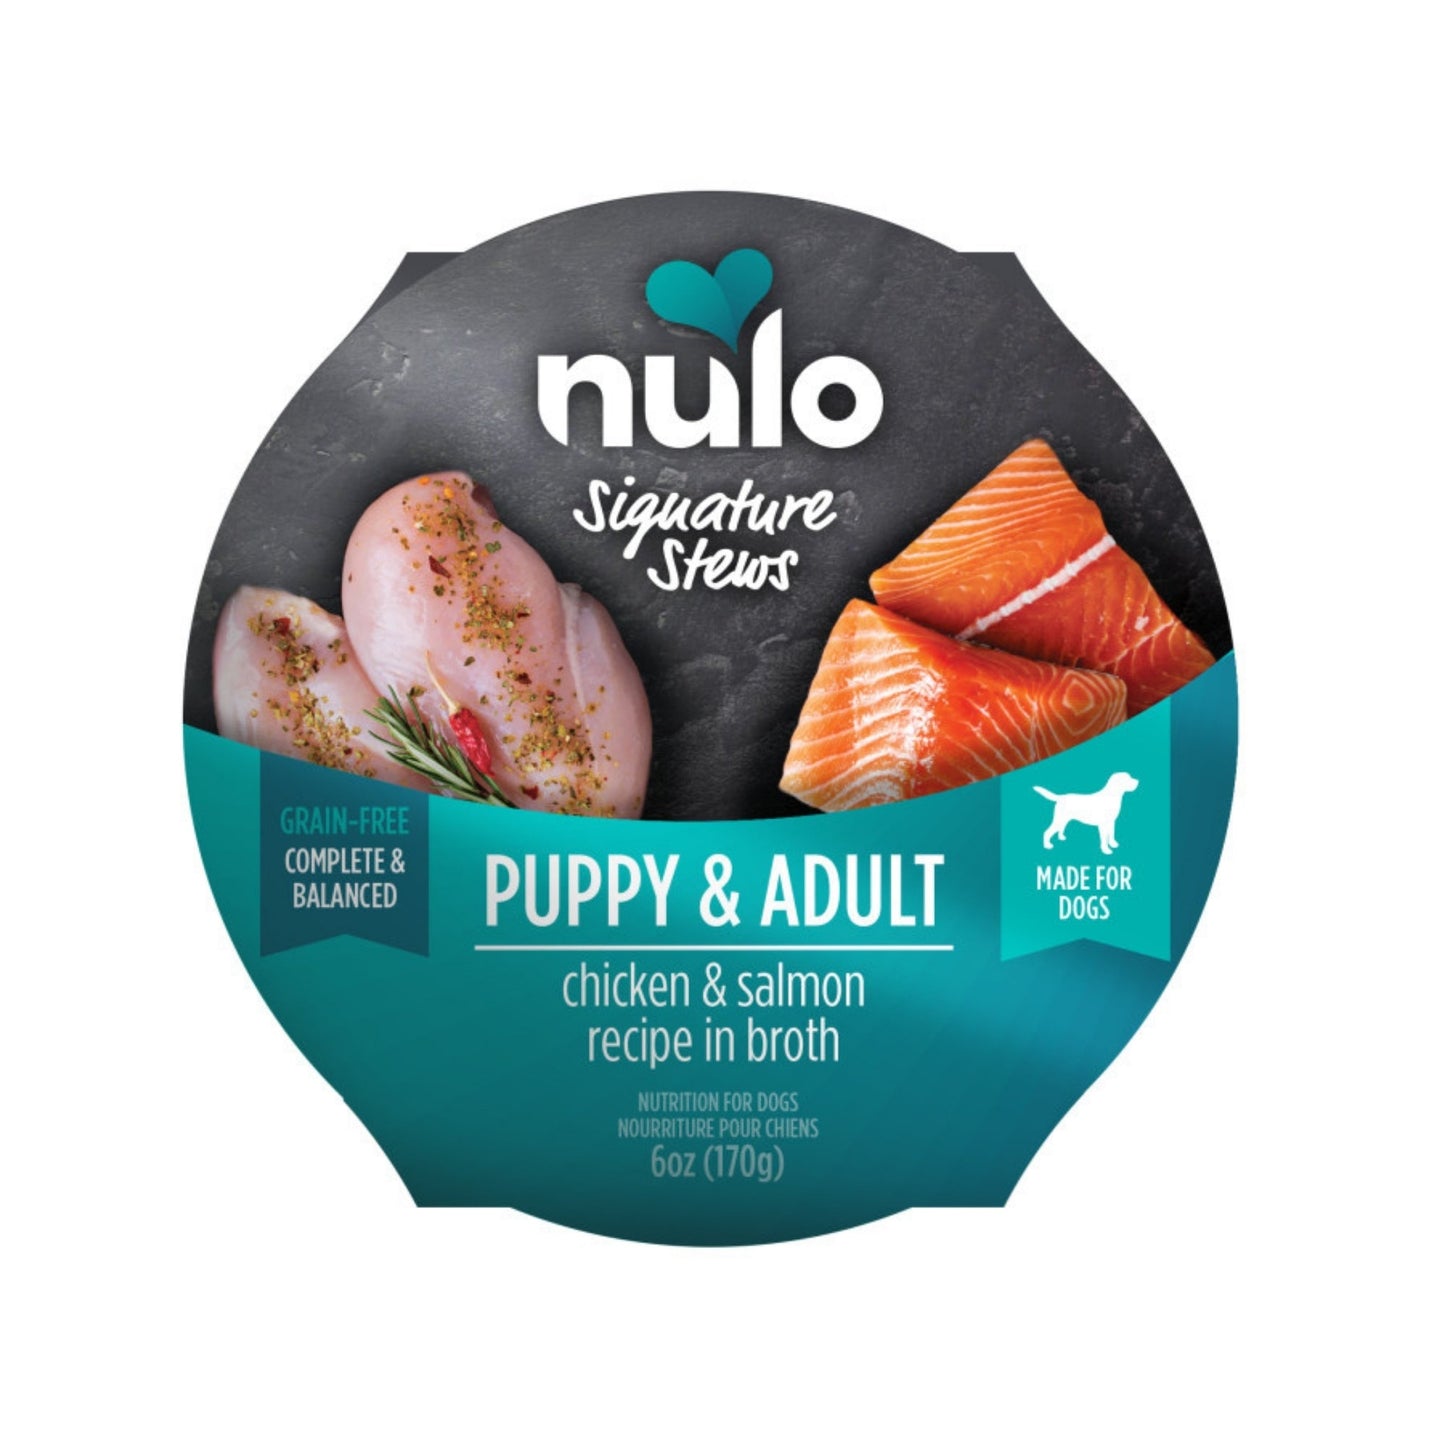 Nulo Signature Stew Puppy & Adult Dog Food Chicken & Salmon 6oz. (Case of 16)